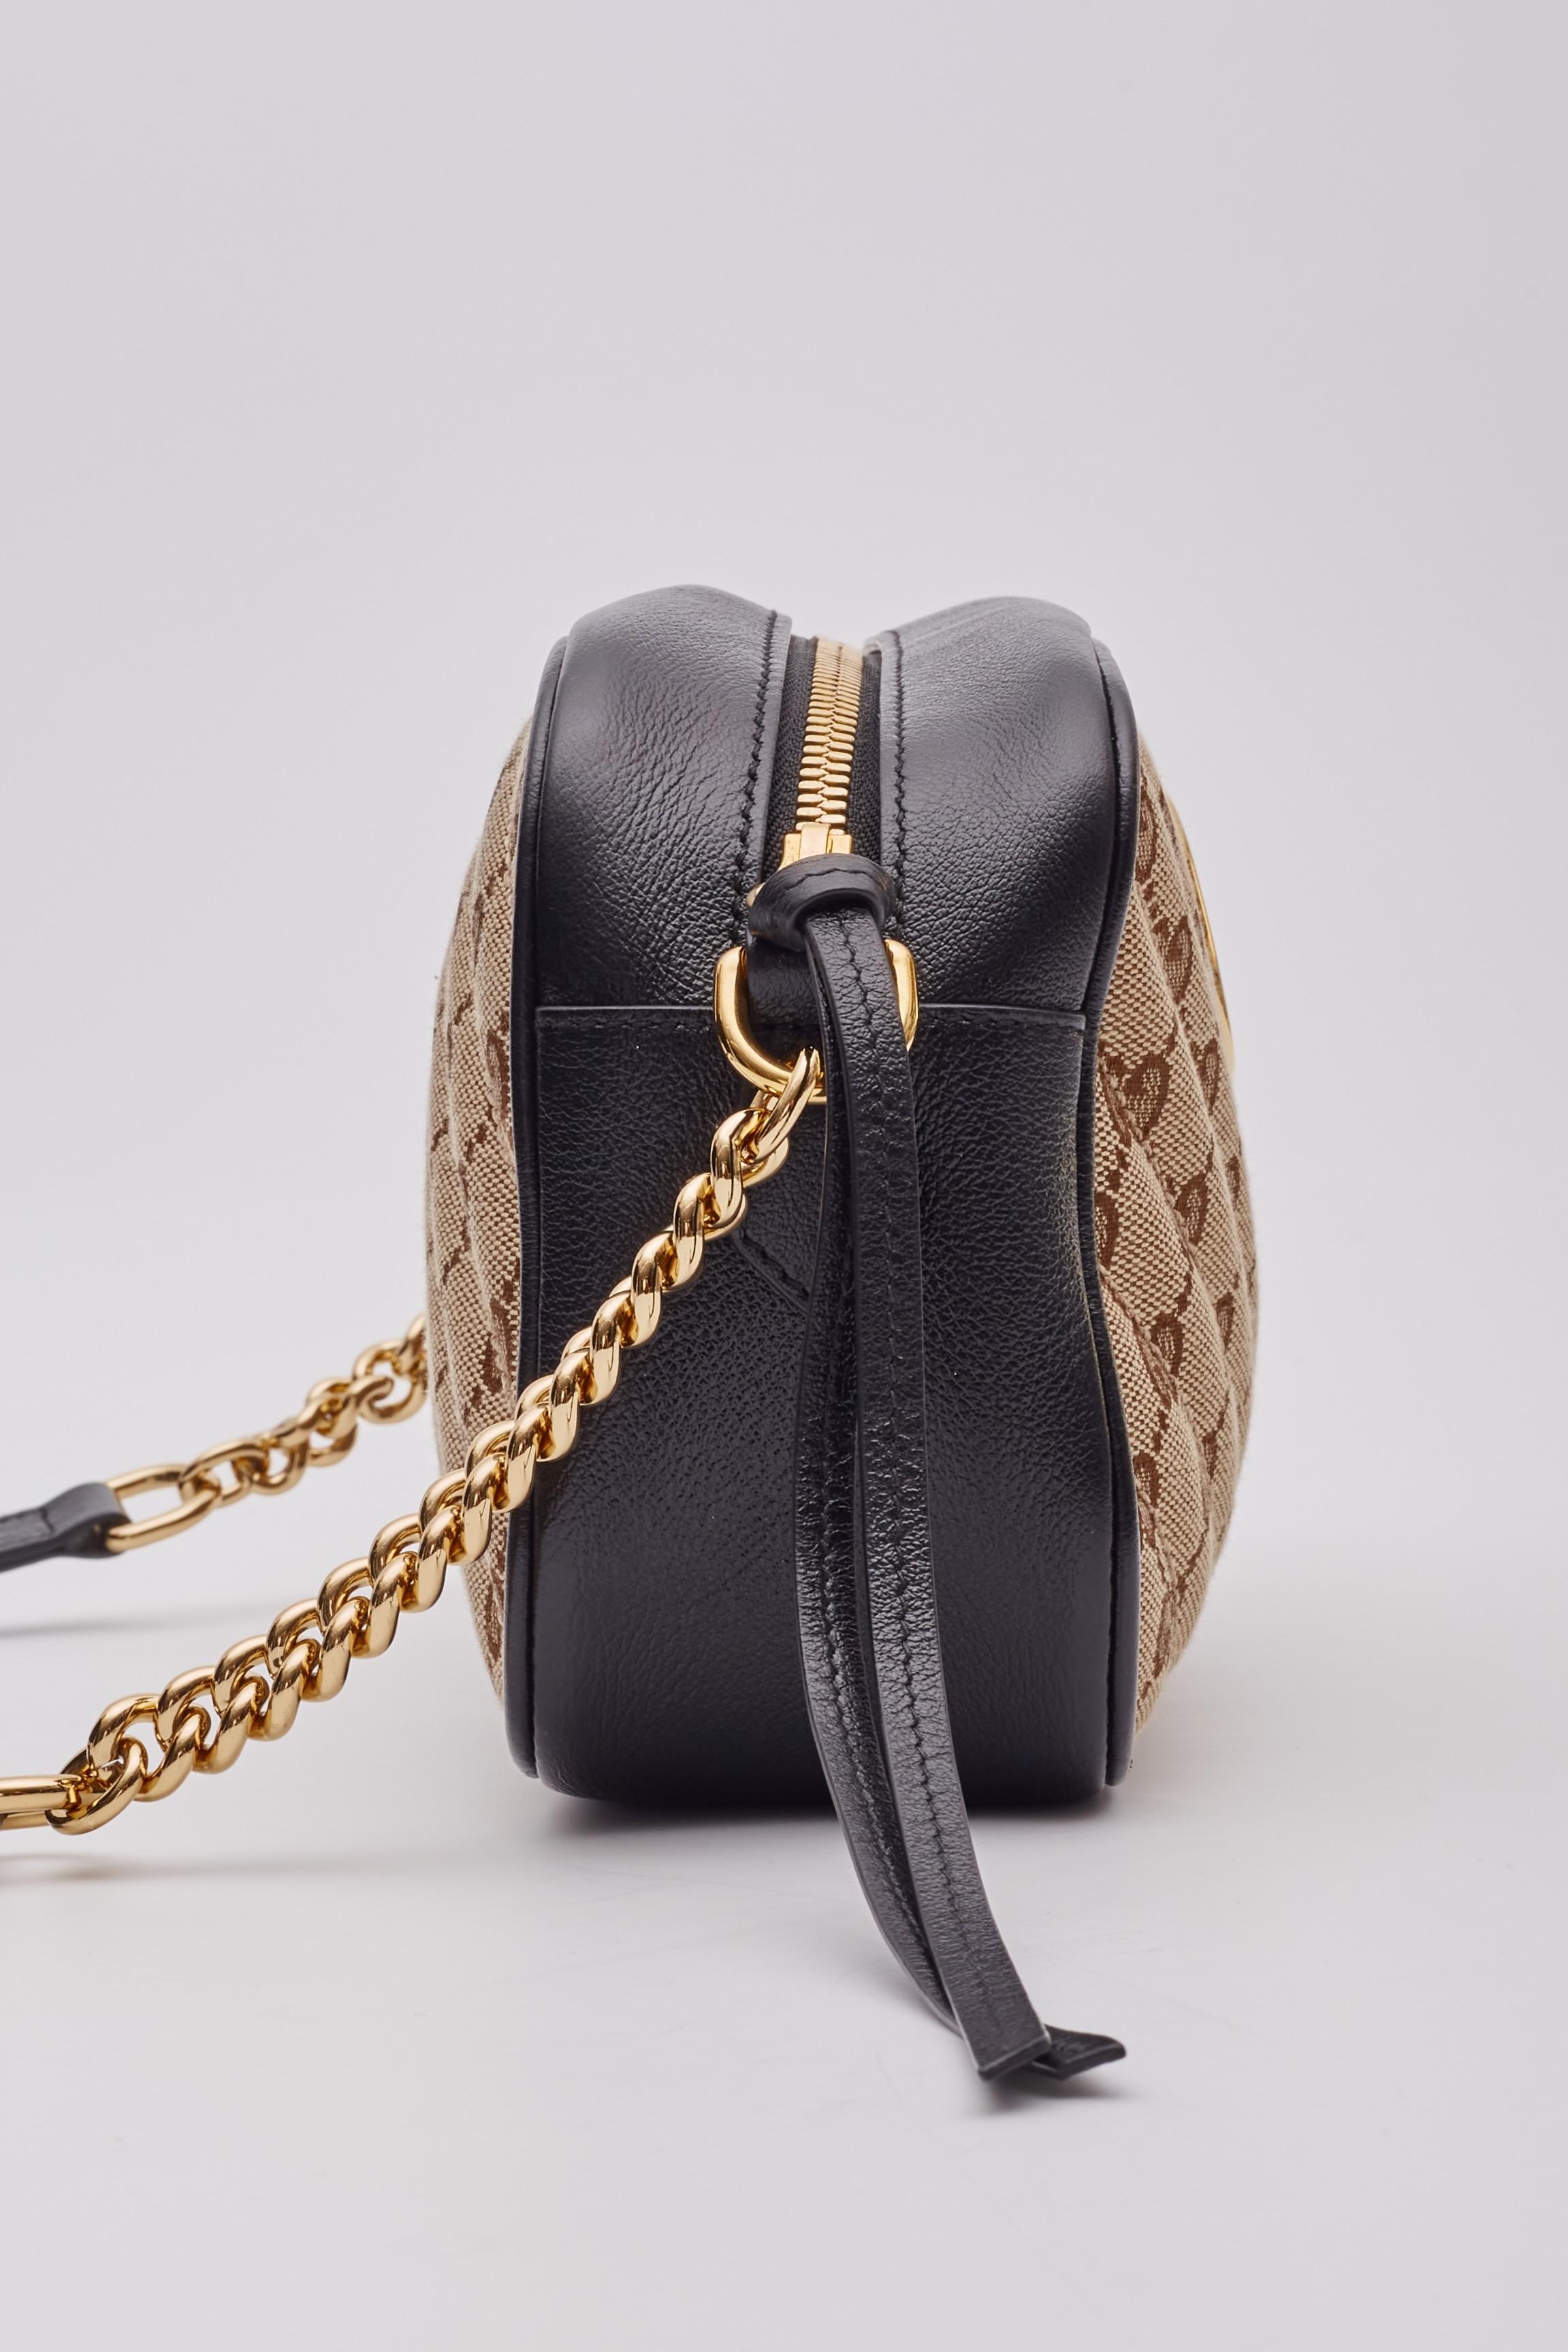 Gucci Monogram Small GG Marmont Shoulder Bag Beige Black For Sale 3